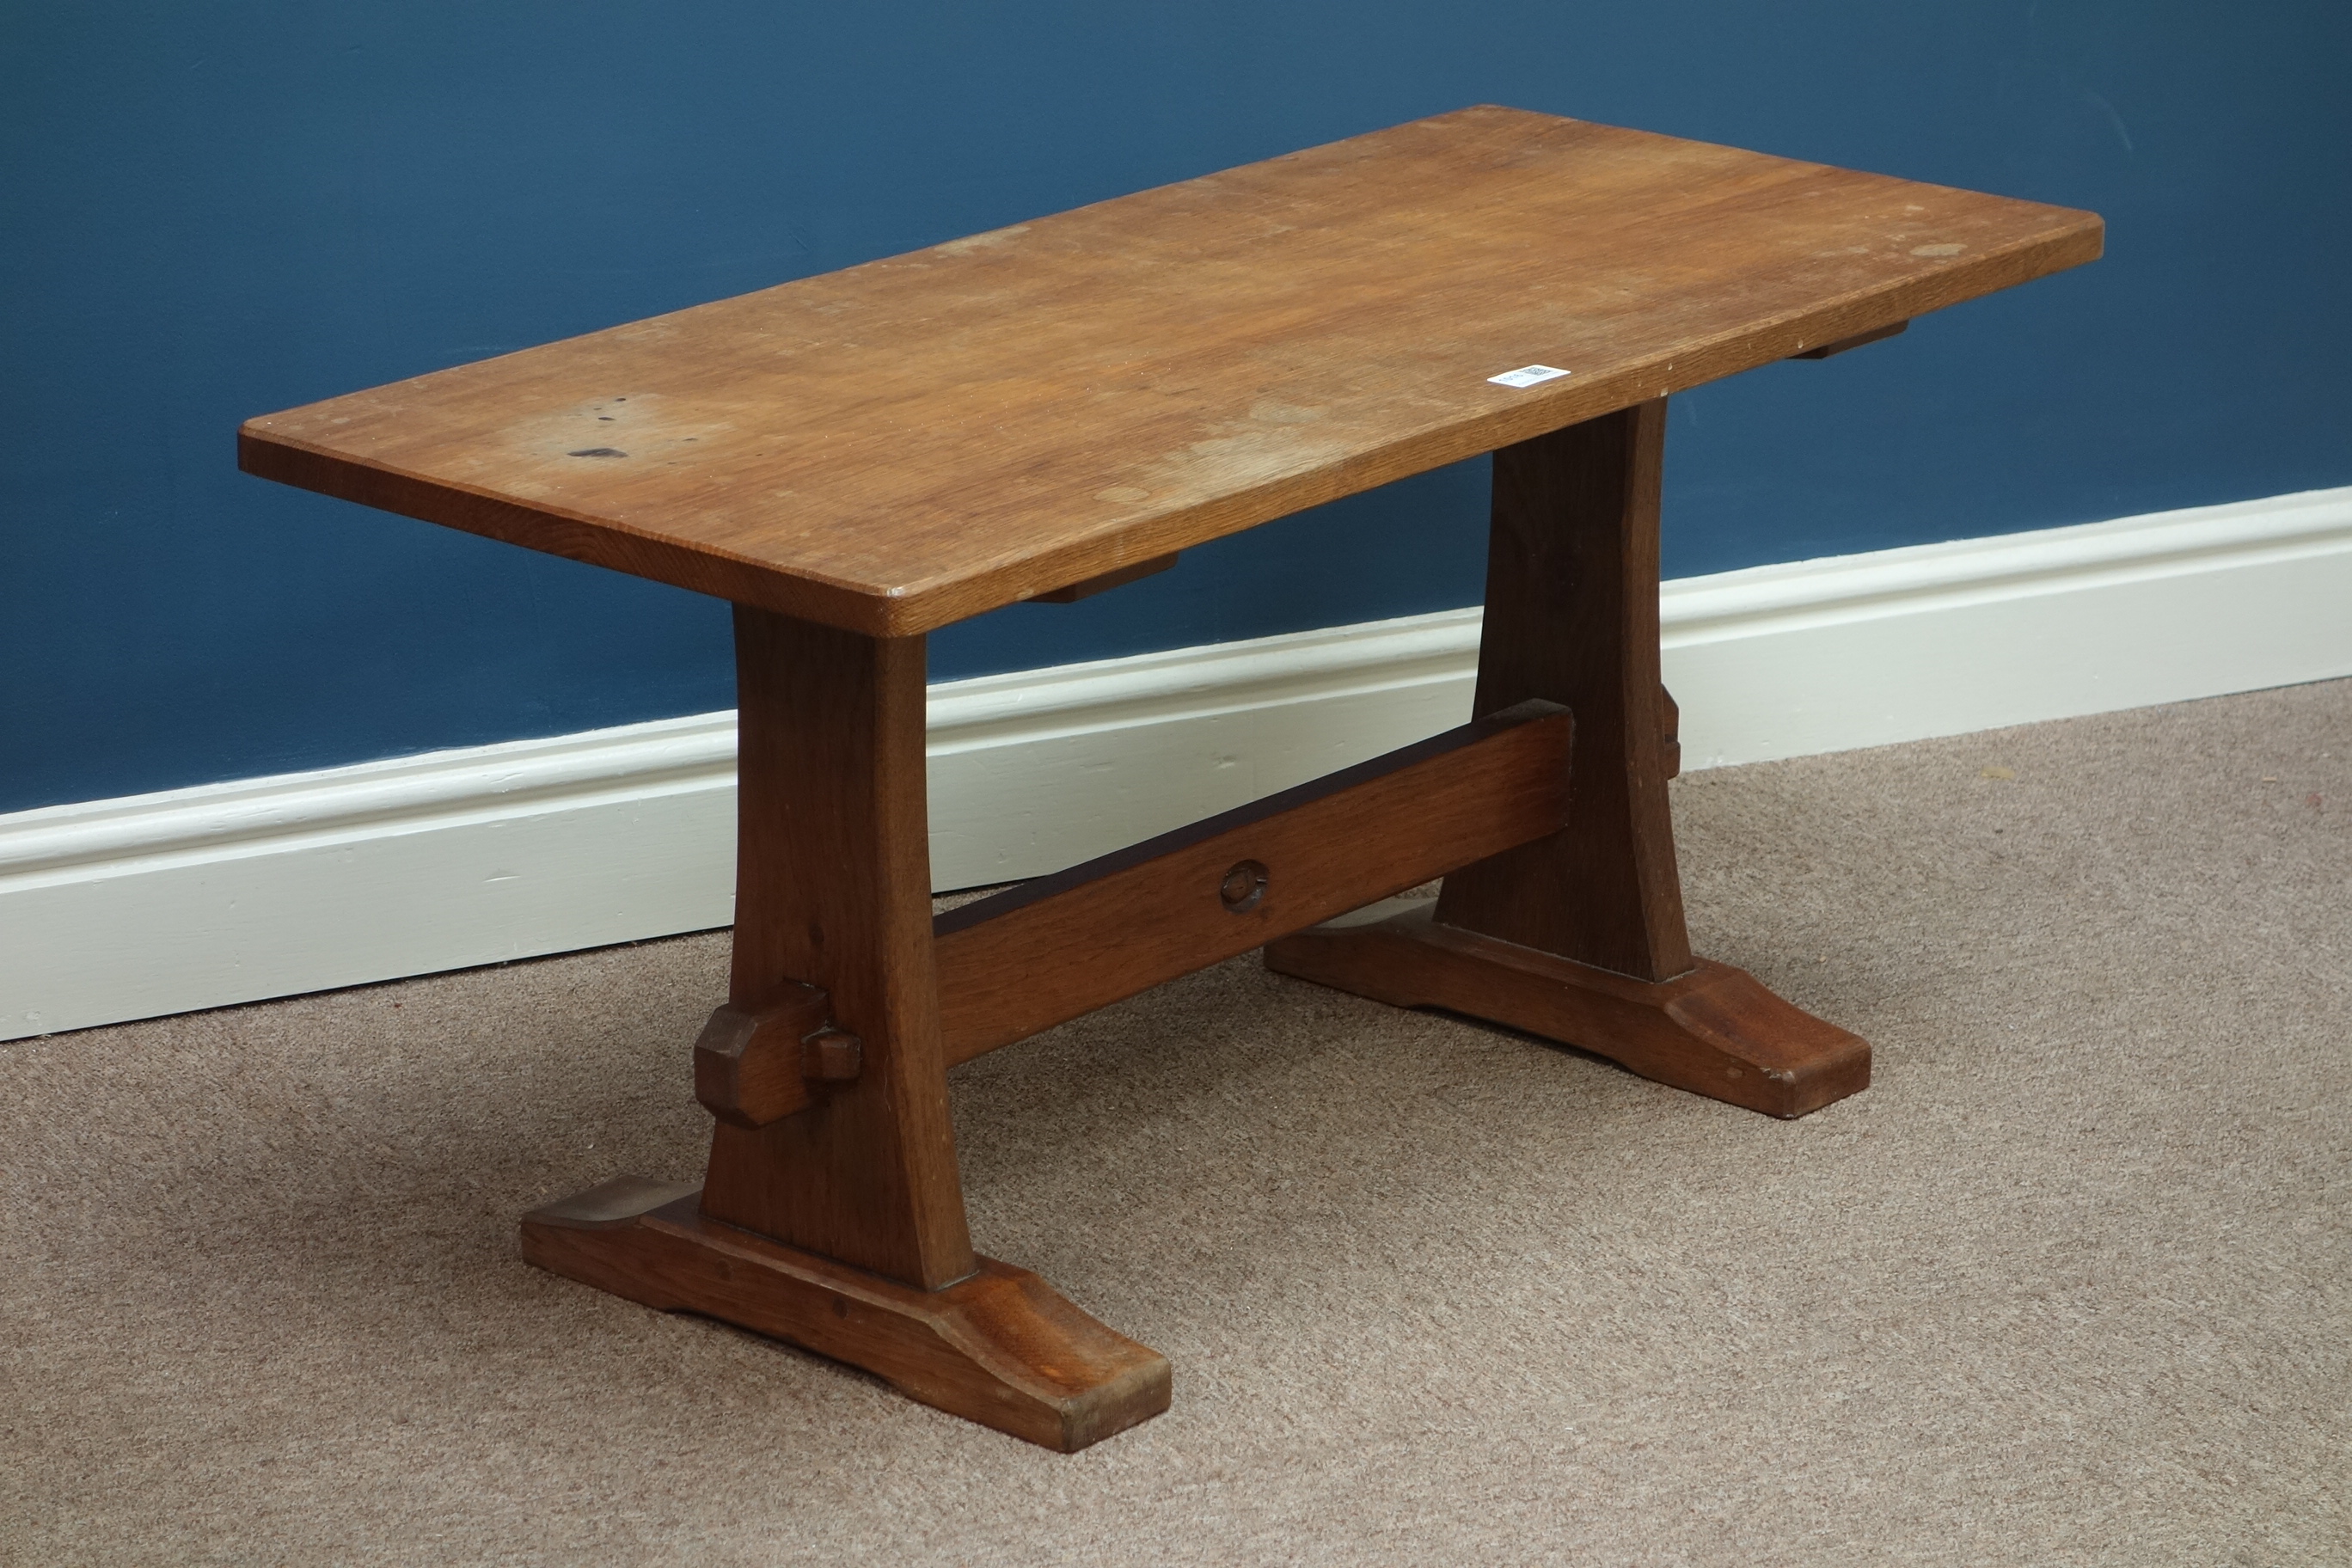 'Acornman' adzed oak rectangular coffee table, stretcher base, by Alan Granger of Brandsby,